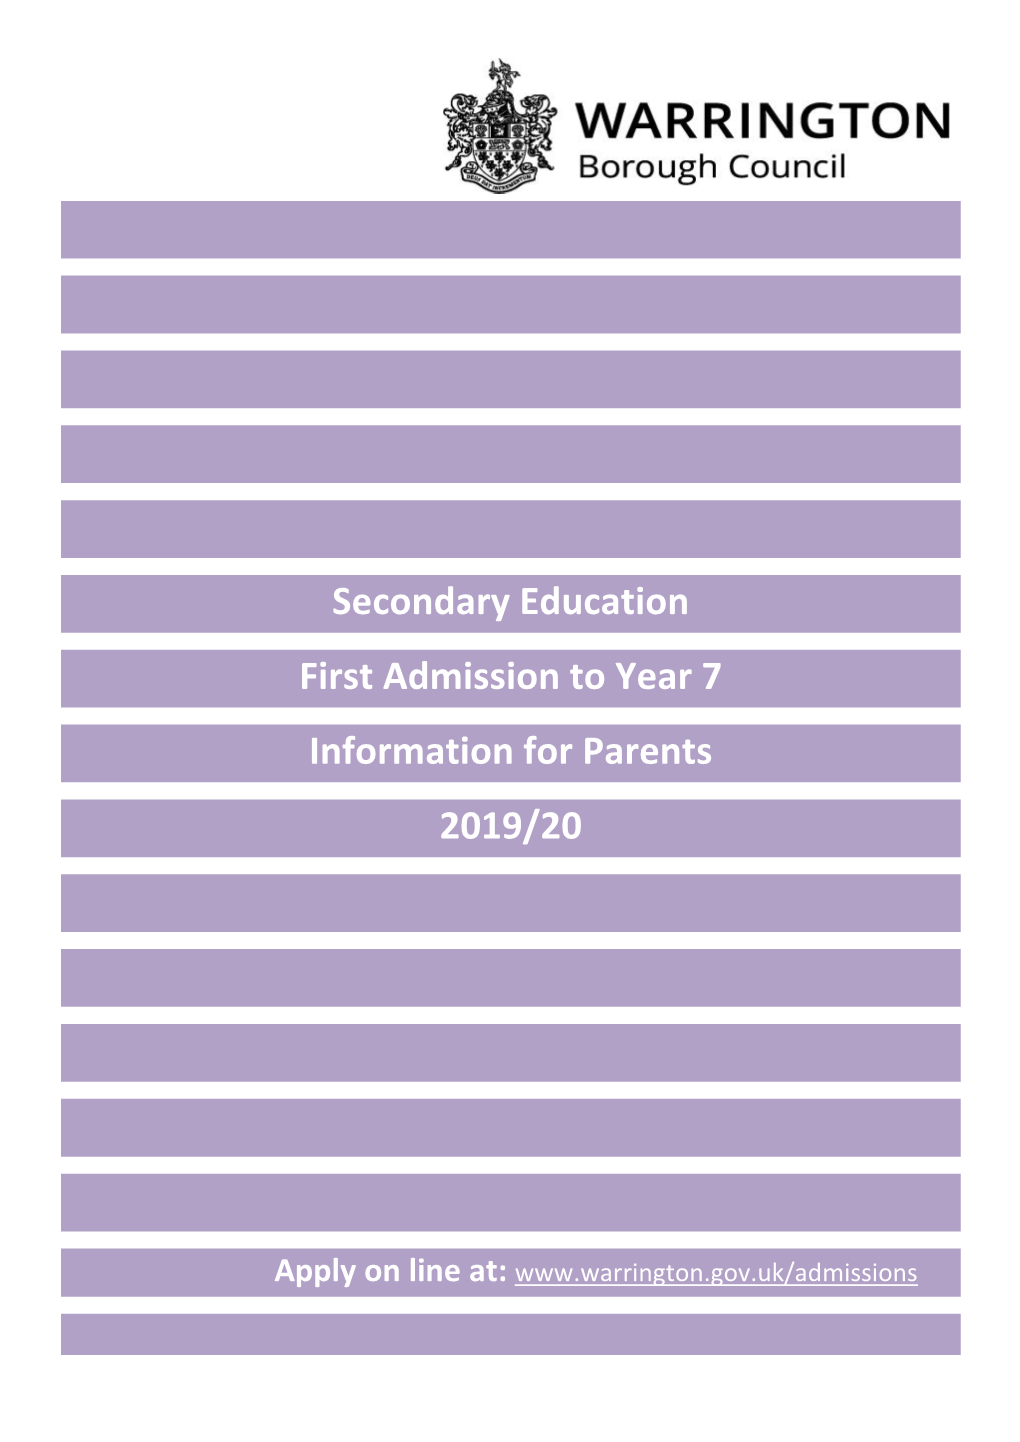 18 Secondary Schools in Warrington